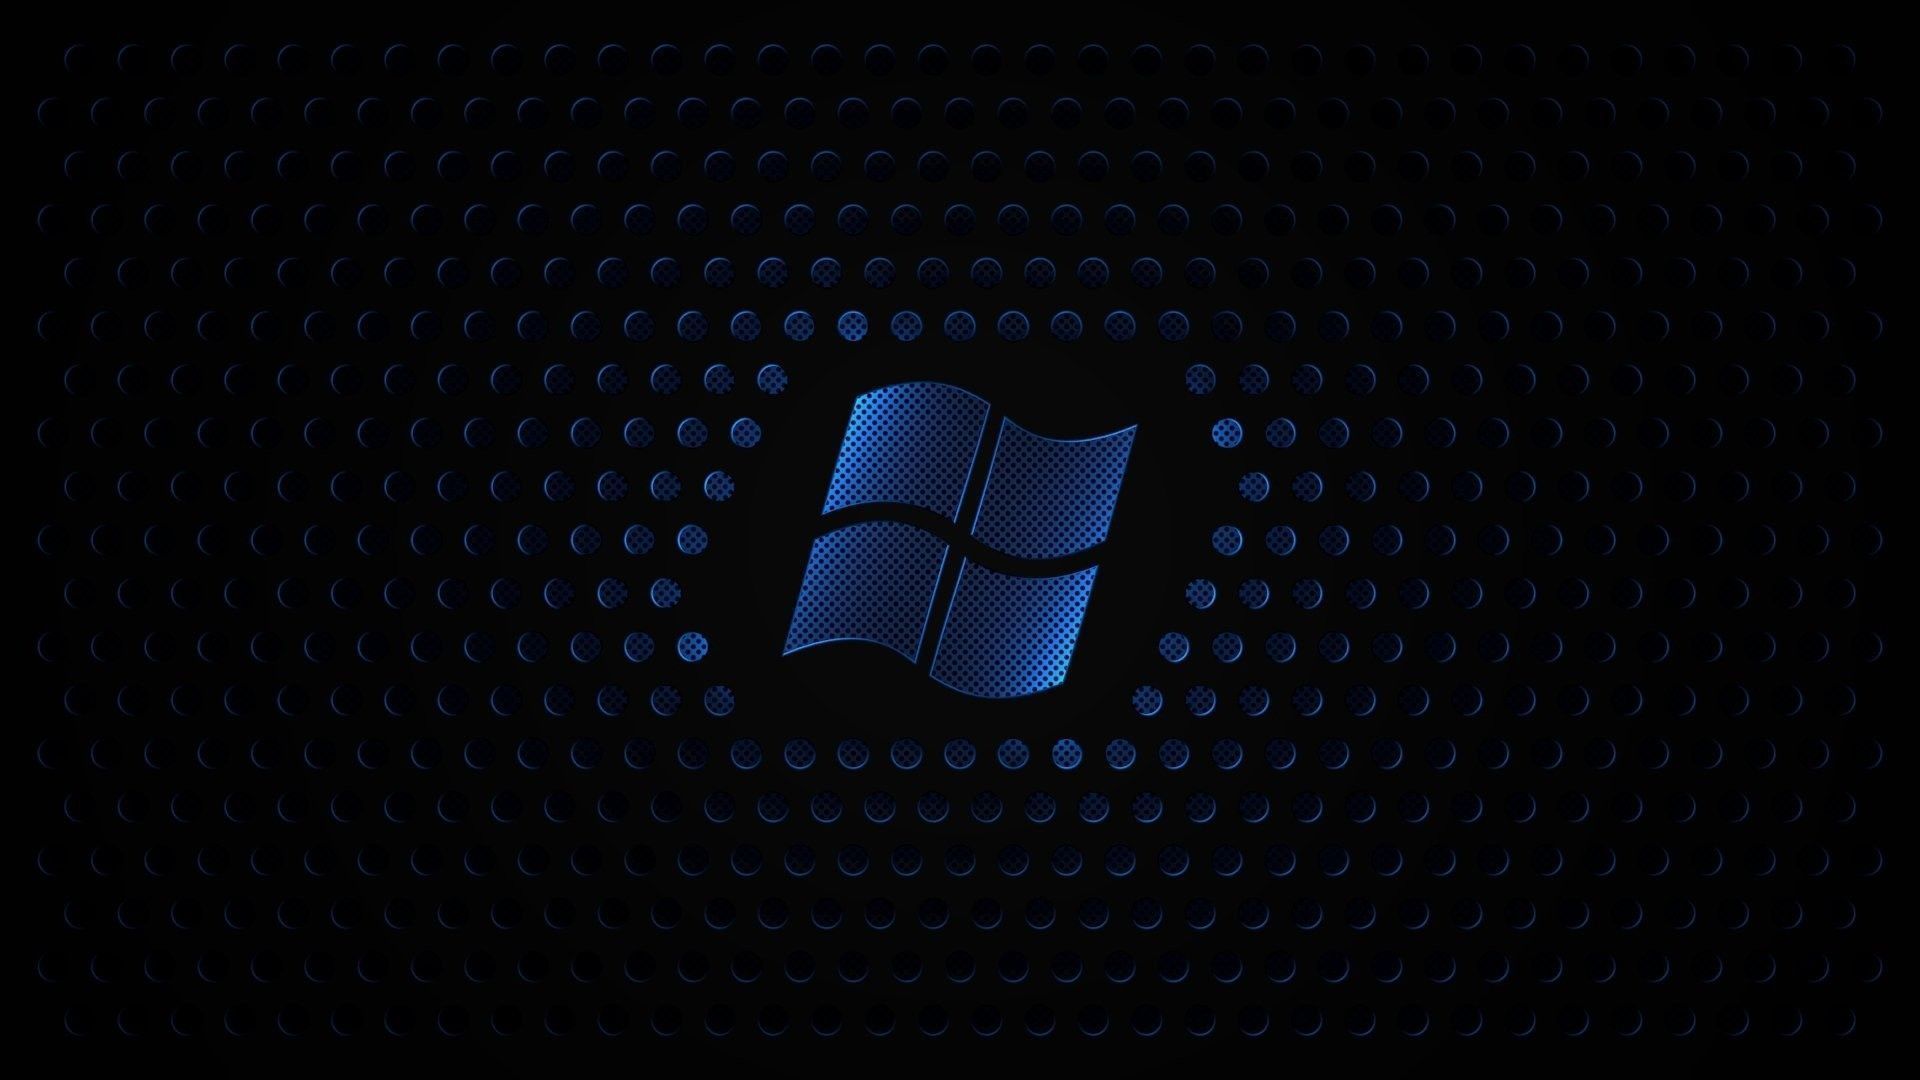 Hd wallpaper Windows Xp Microsoft Logos wallpapers55.com - Best